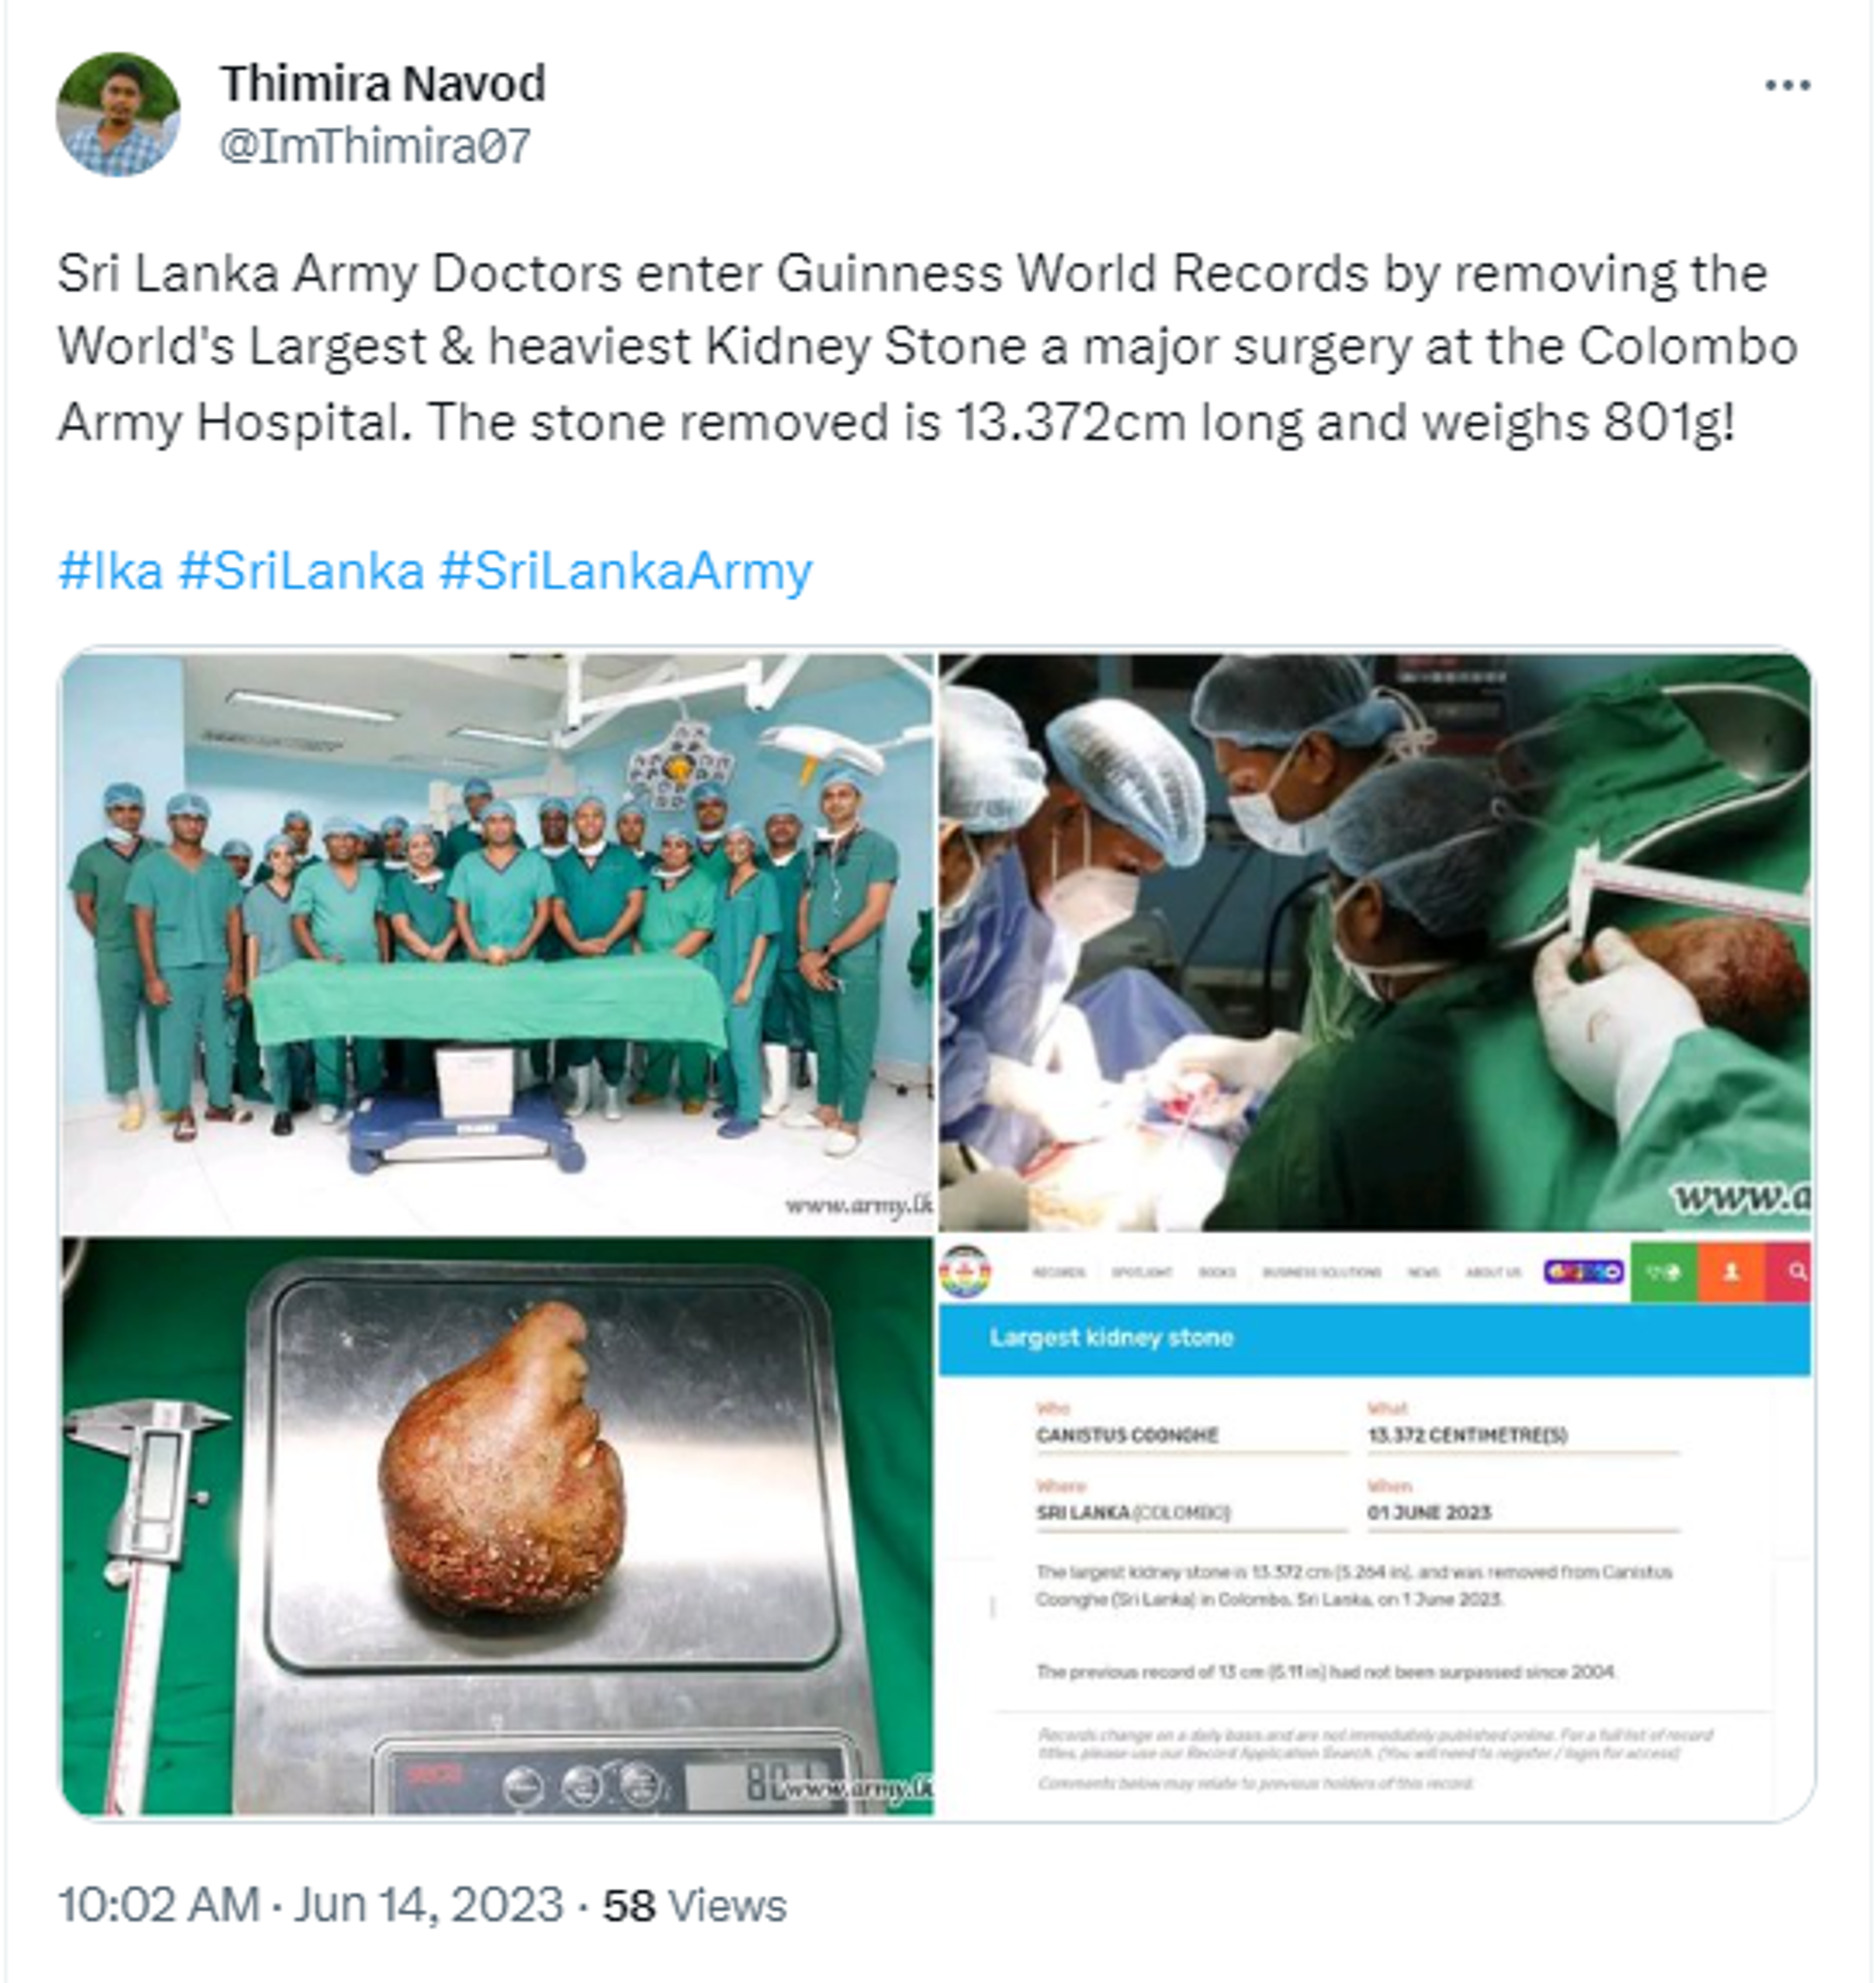 Sri Lanka Army Doctors Guinness World Records Removing World’s Largest Kidney Stone of 801gm   - Sputnik India, 1920, 14.06.2023